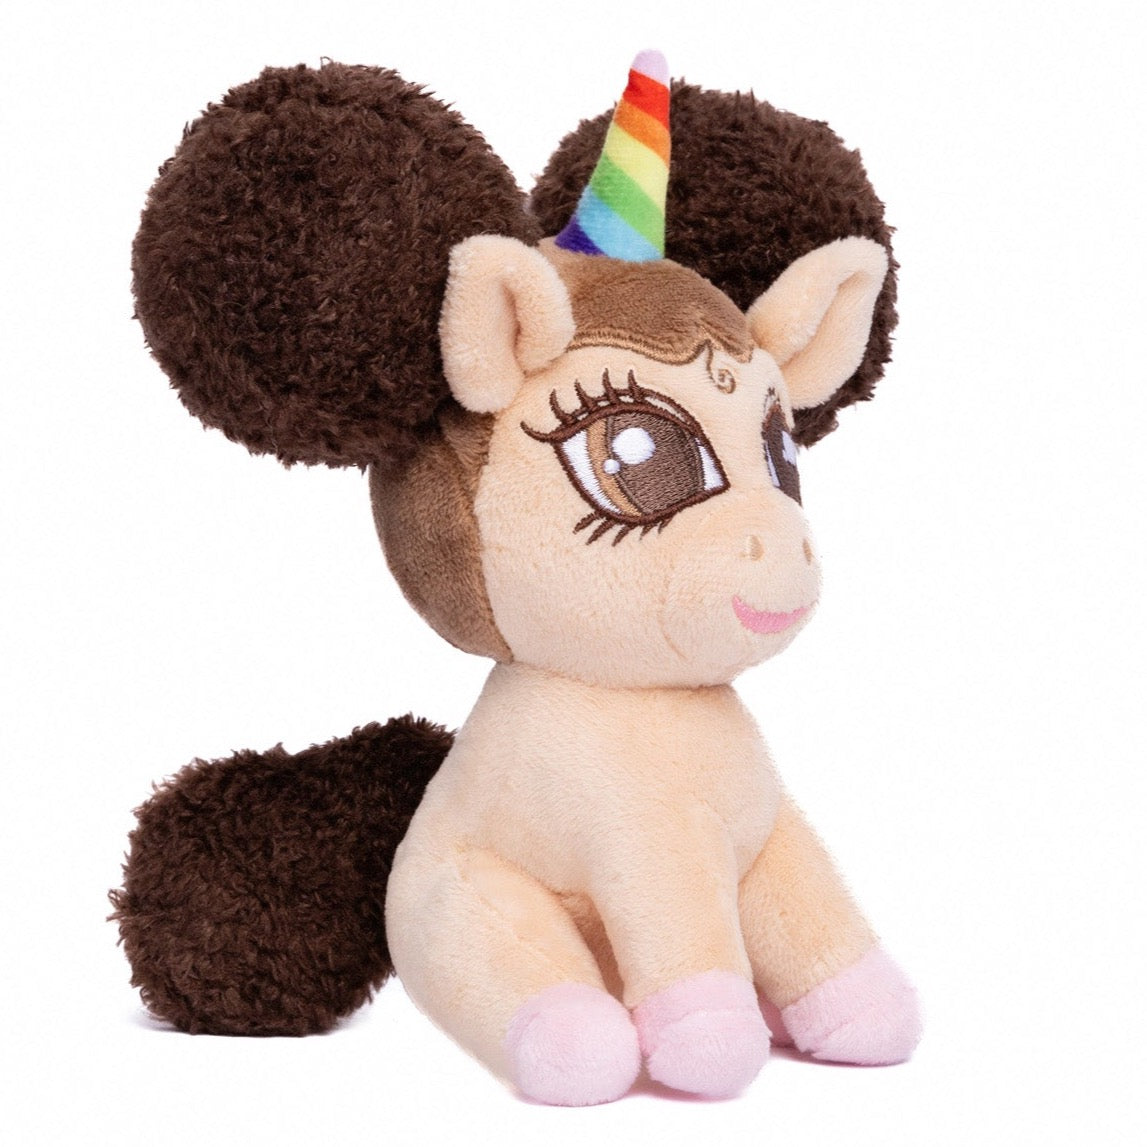 Baby Alexis Unicorn Plush Toy - Sitting 6 inch